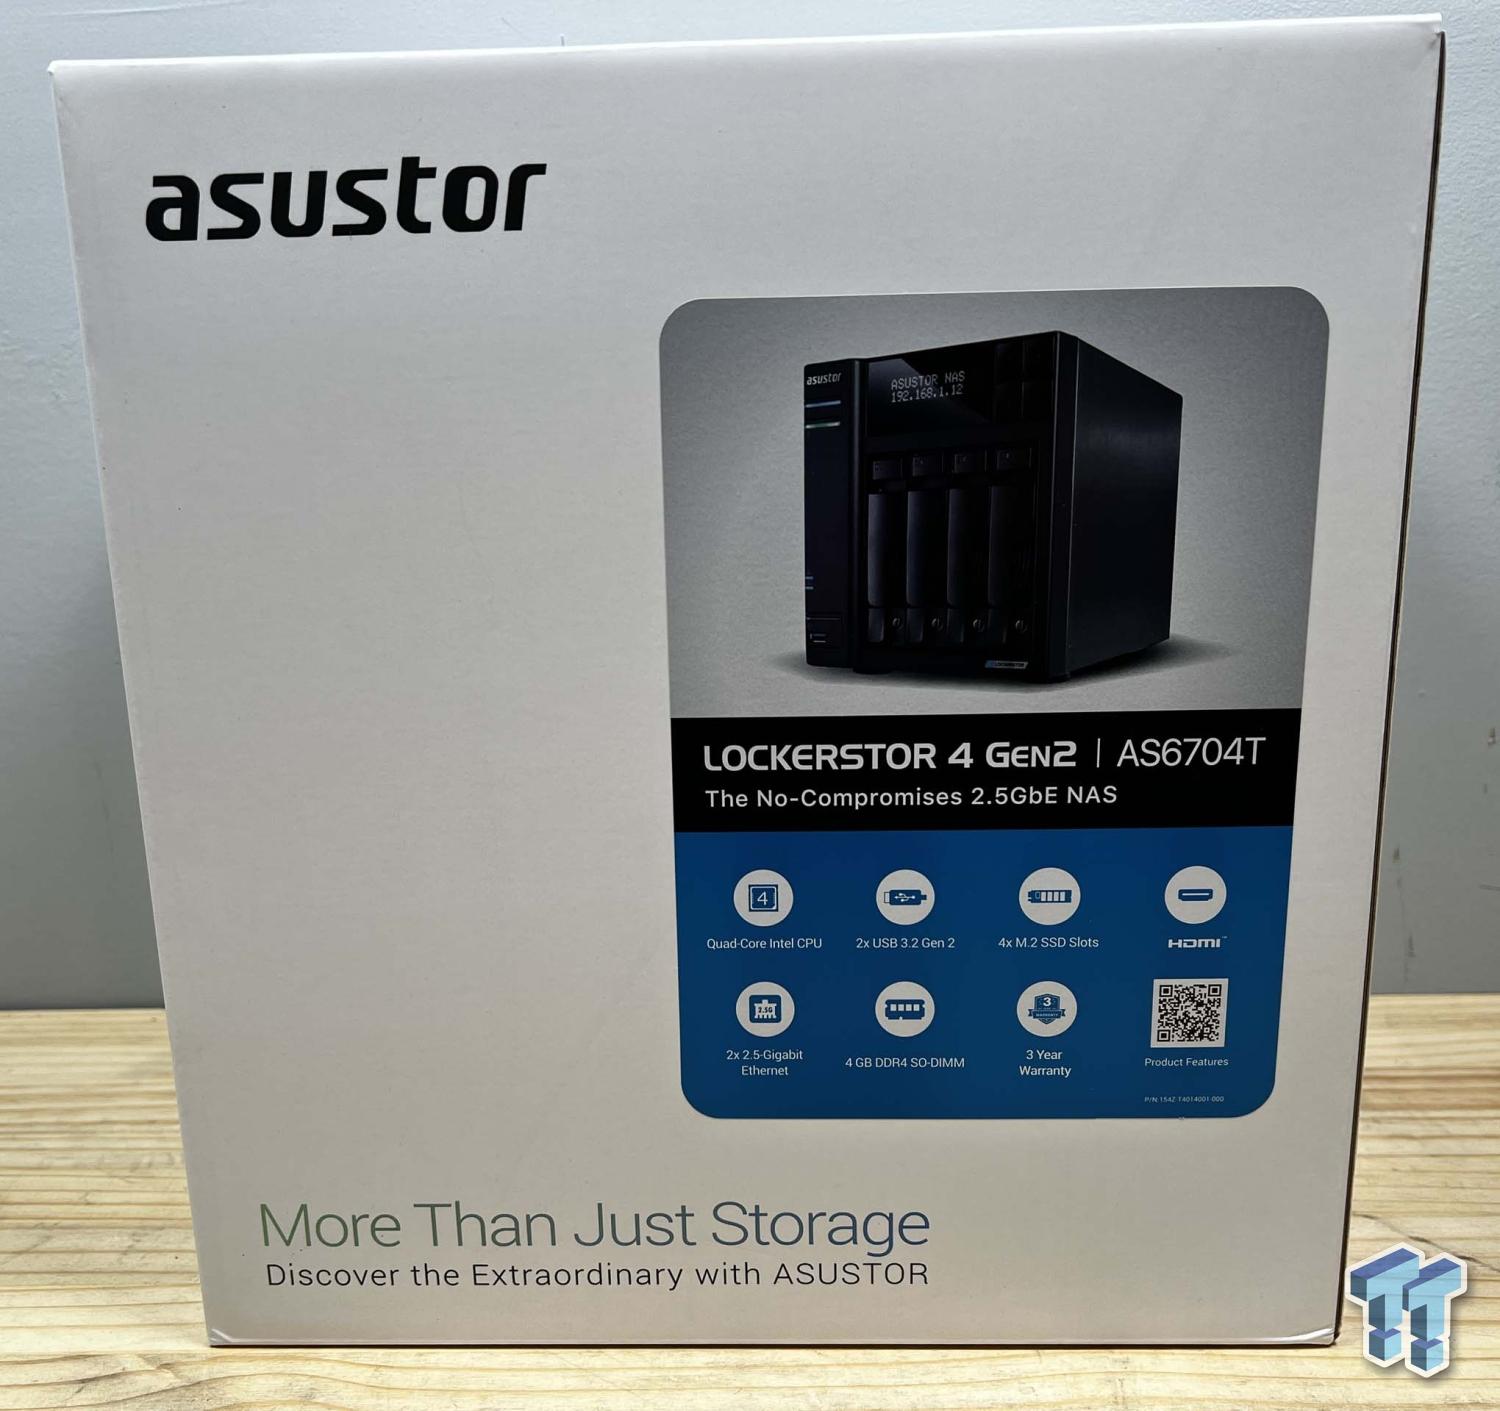 Asustor Lockerstor 4 Gen2 (AS6704T) NAS Review